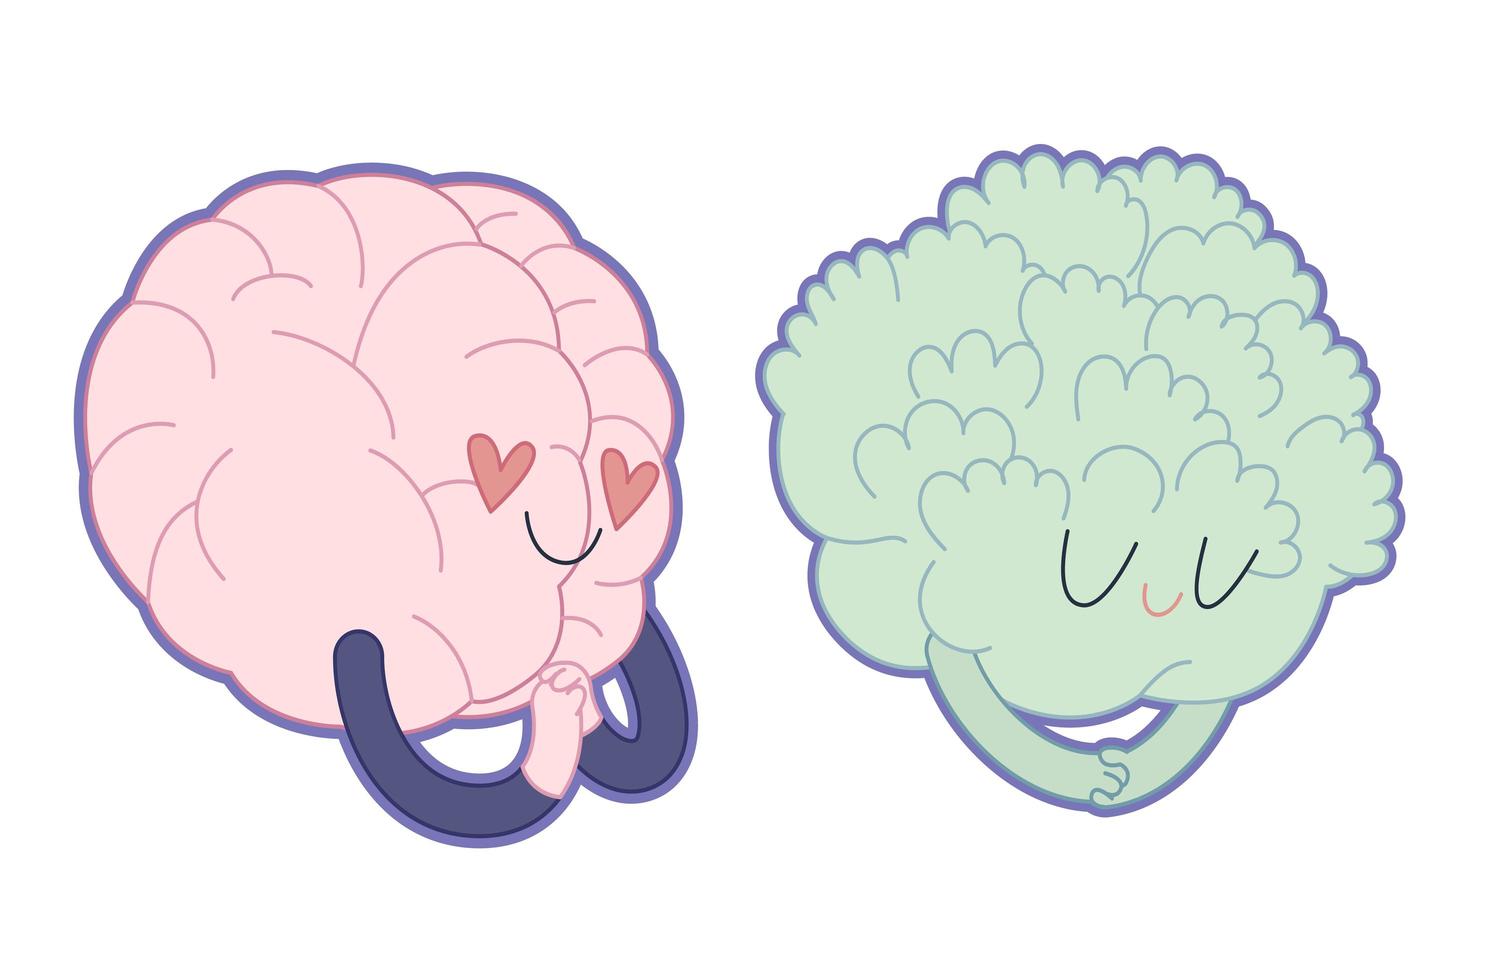 Love to broccoli, Brain collection vector